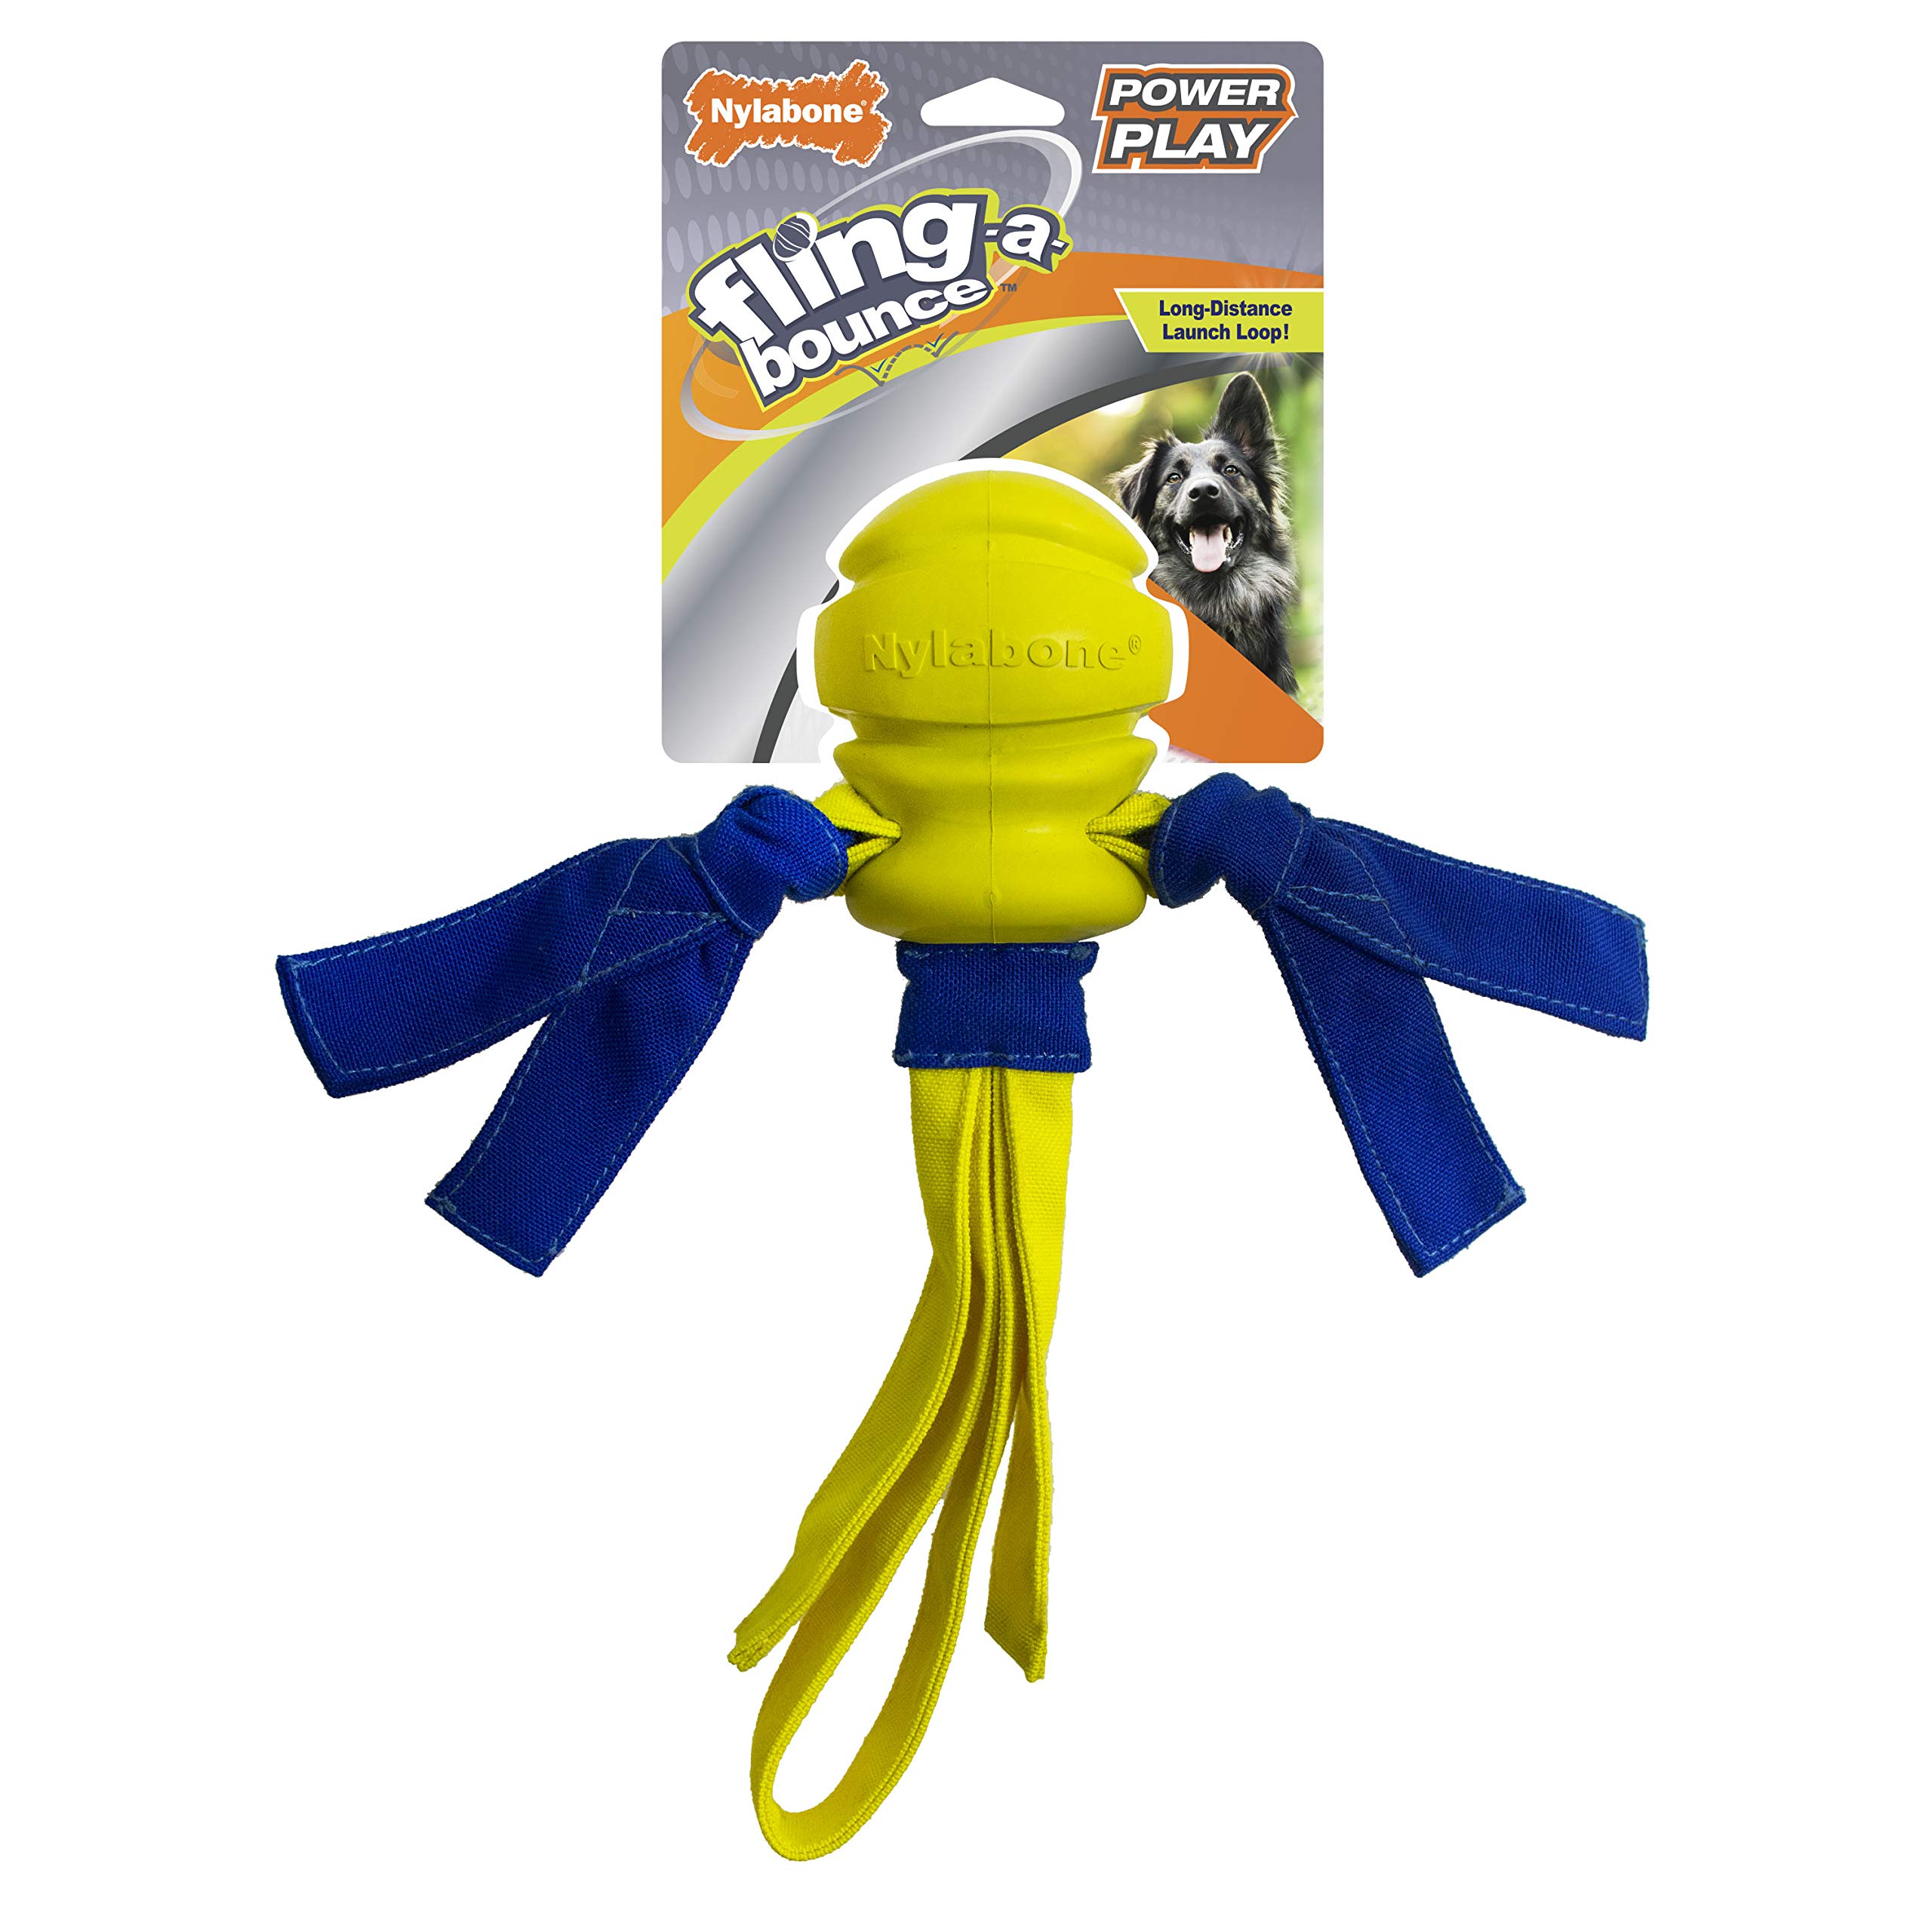 Nylabone Fling-a-Bounce Hundespielzeug, besonders stark, Power-Play, Langstrecken-Launch